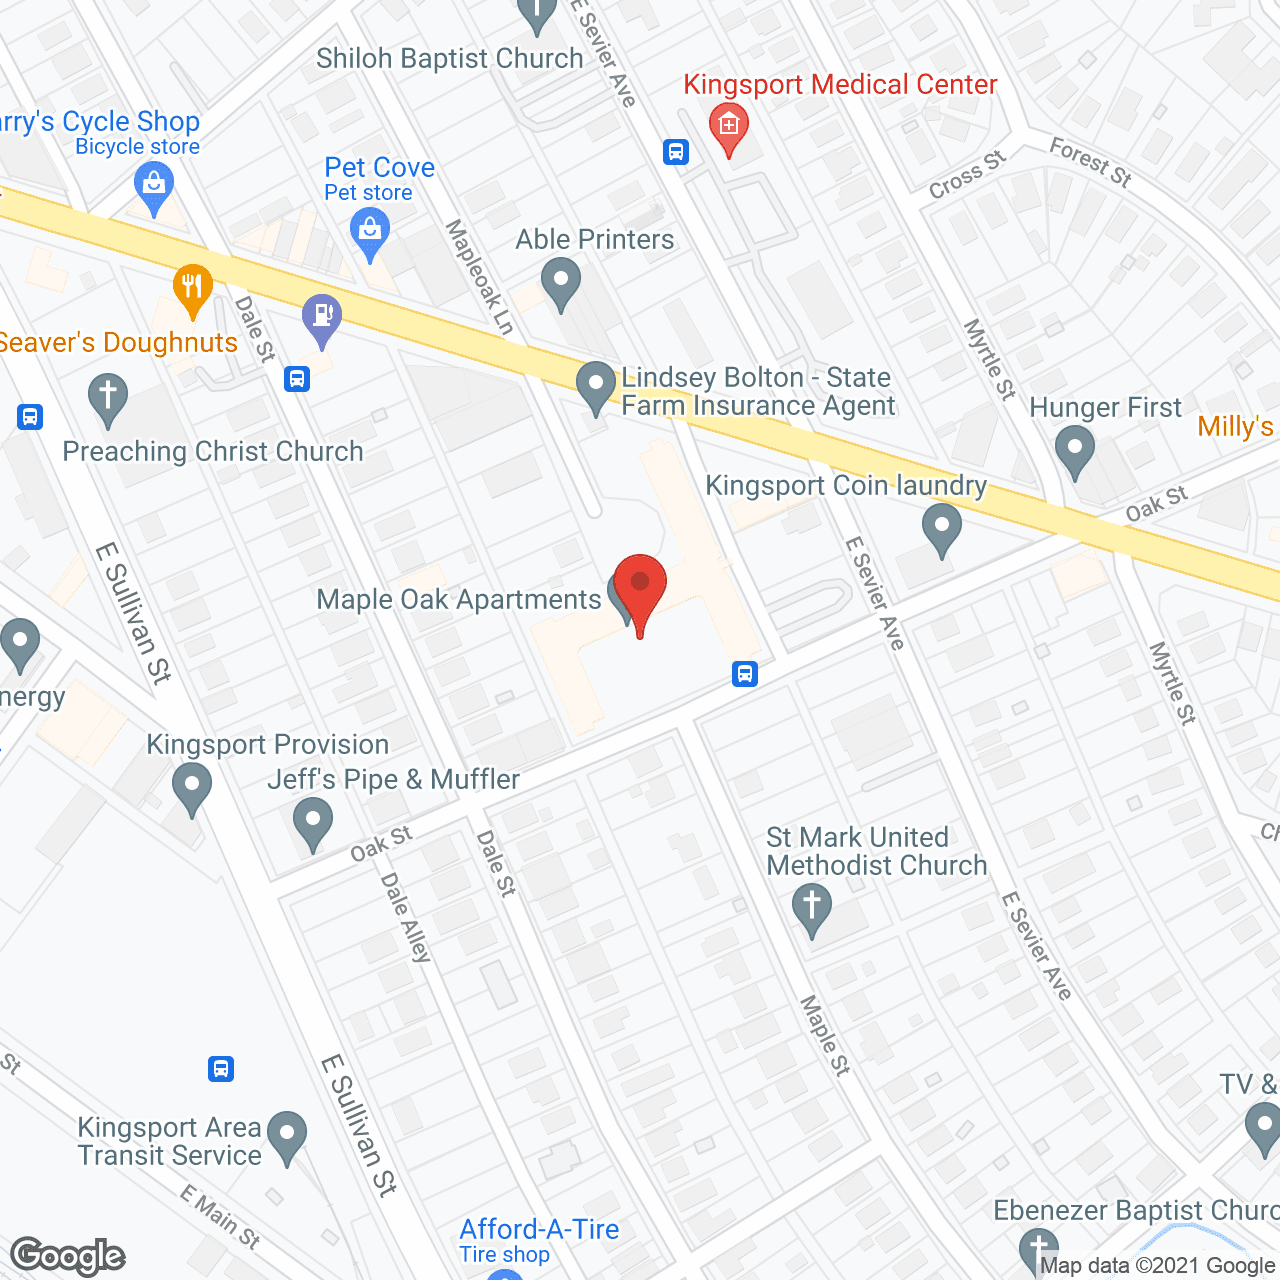 Maple Oak Apartments in google map